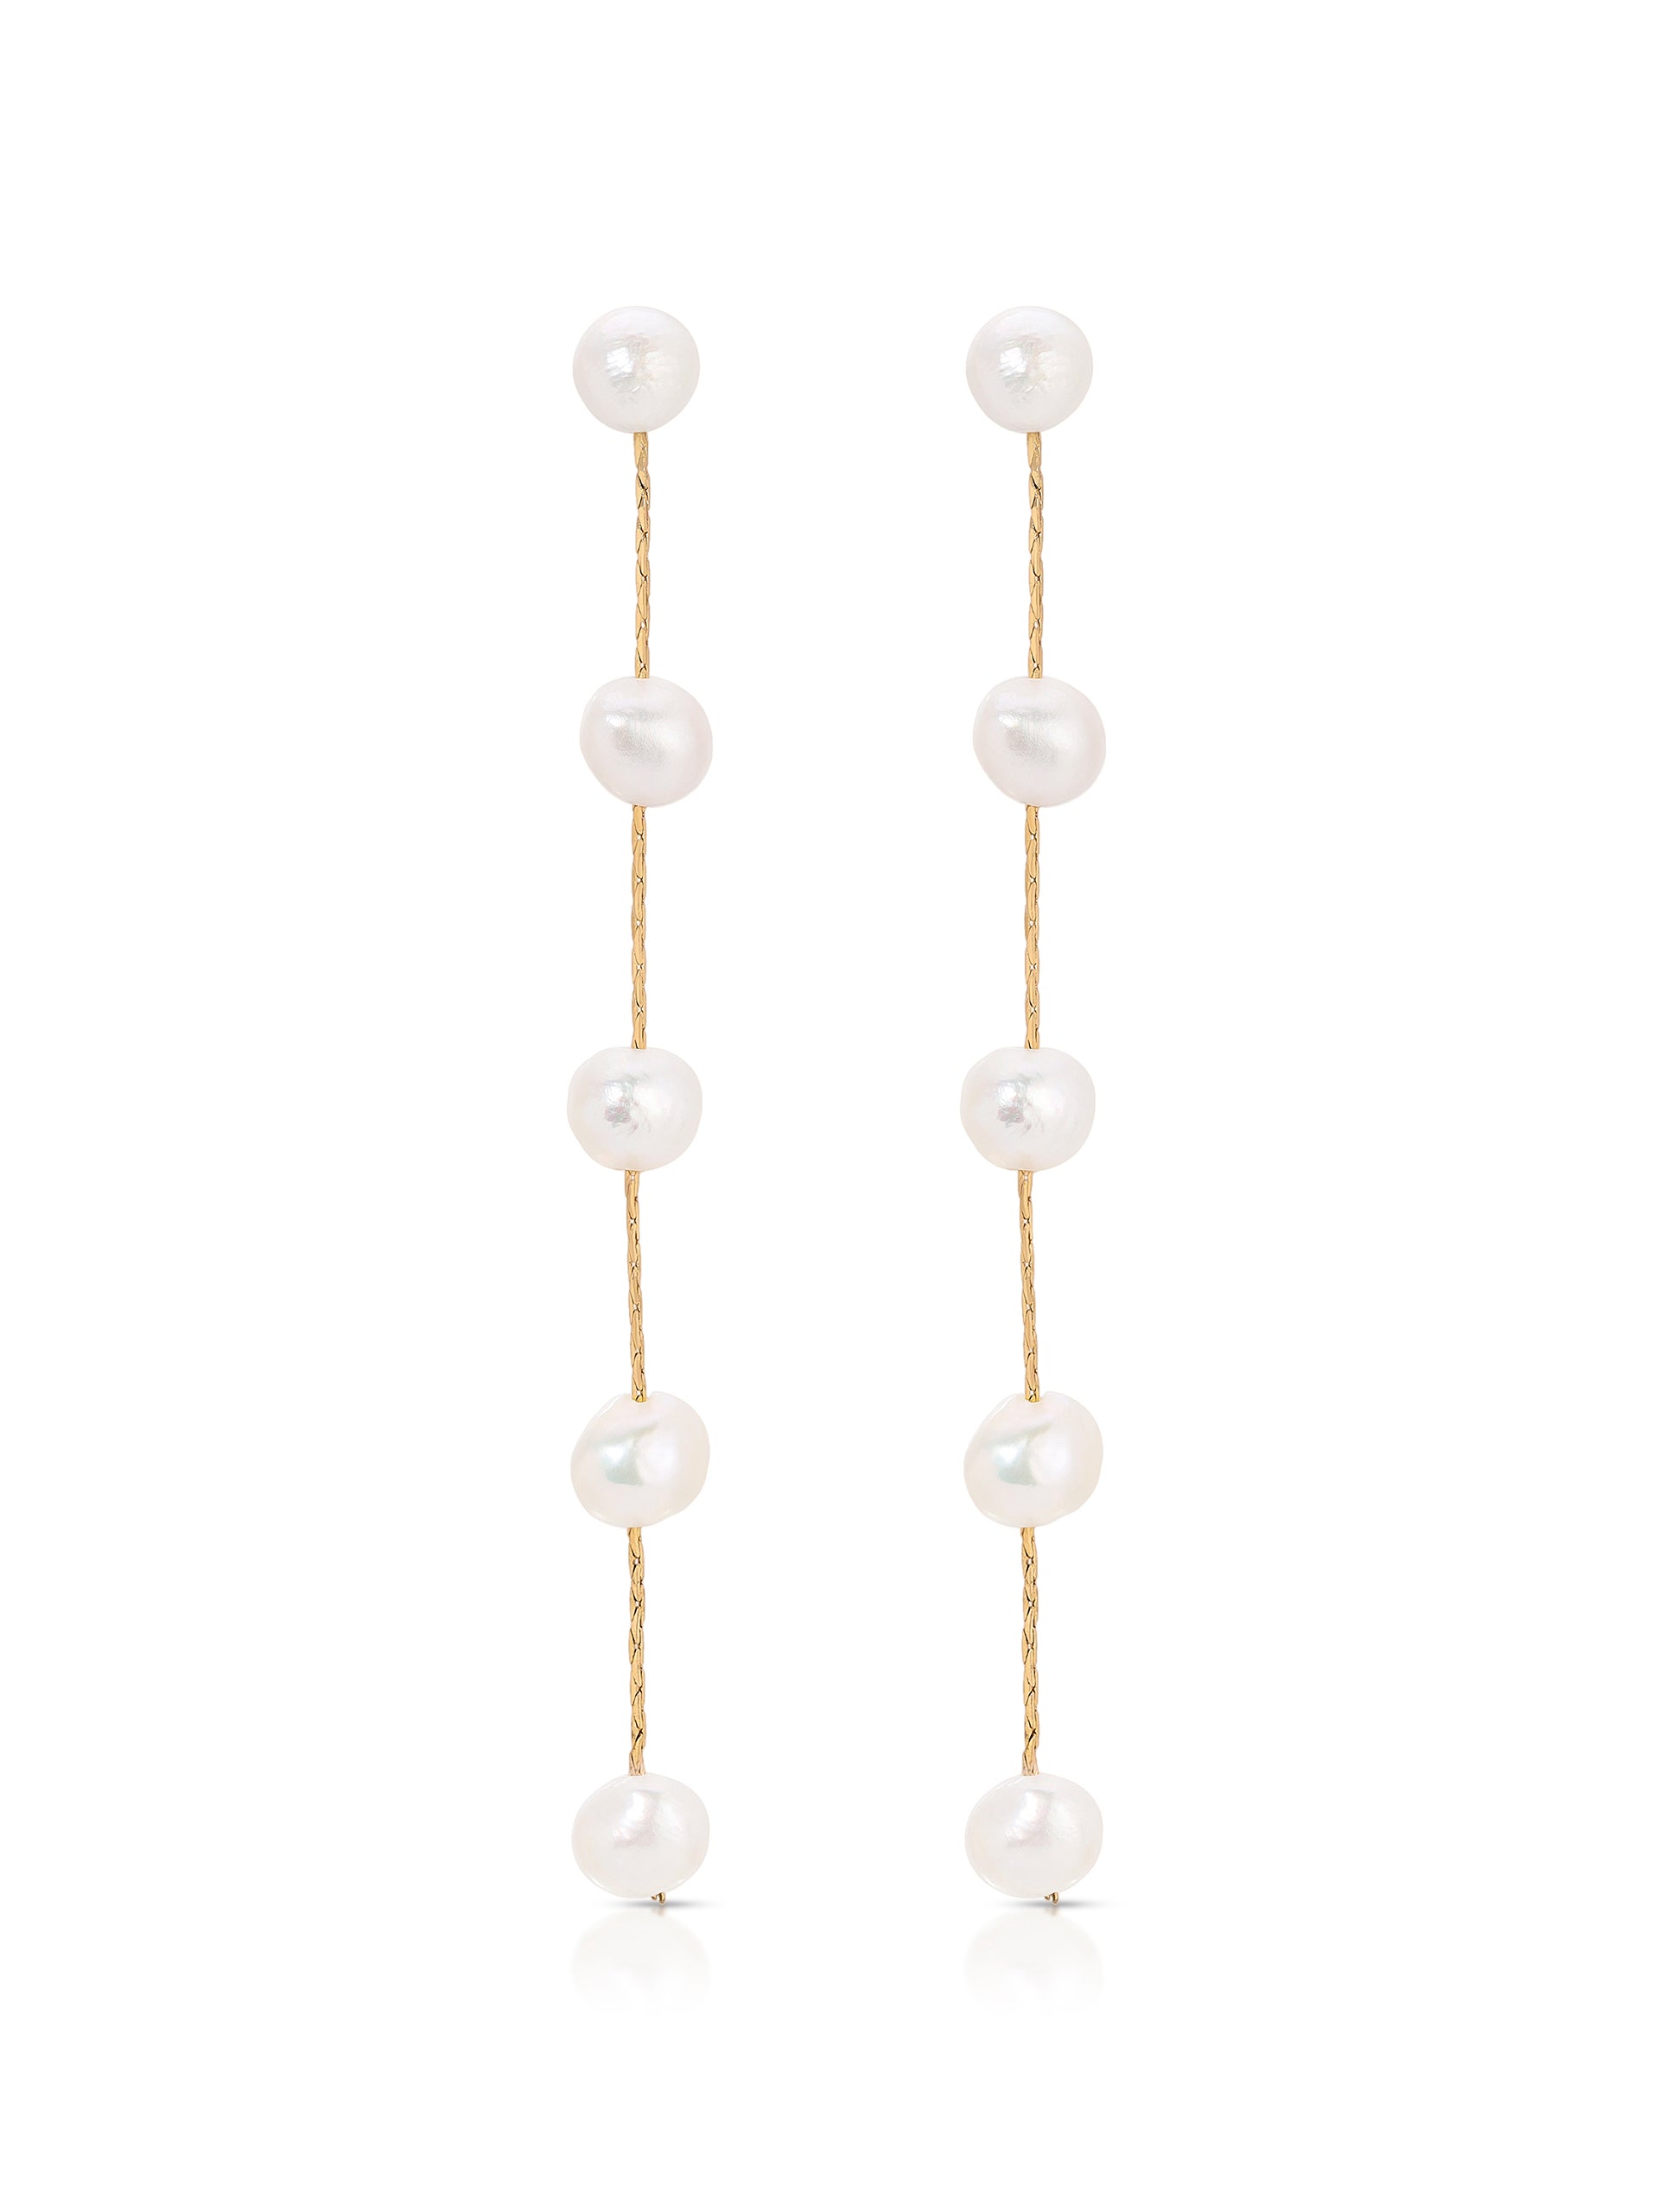 Dripping Pearl Delicate Drop Earrings